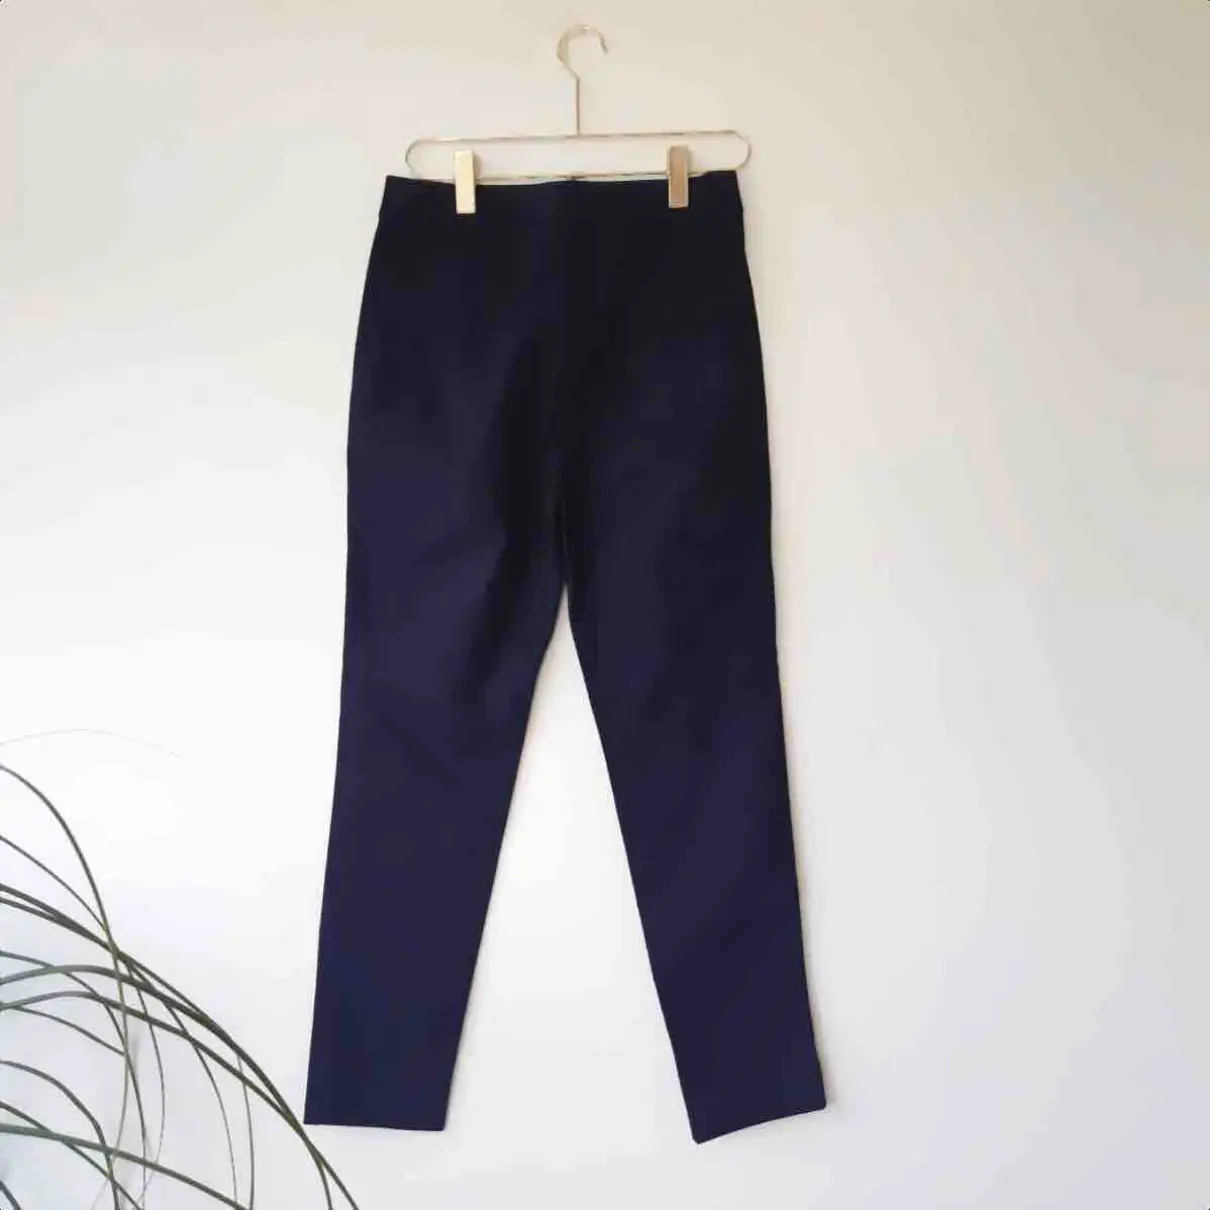 Buy Apiece Apart Trousers online